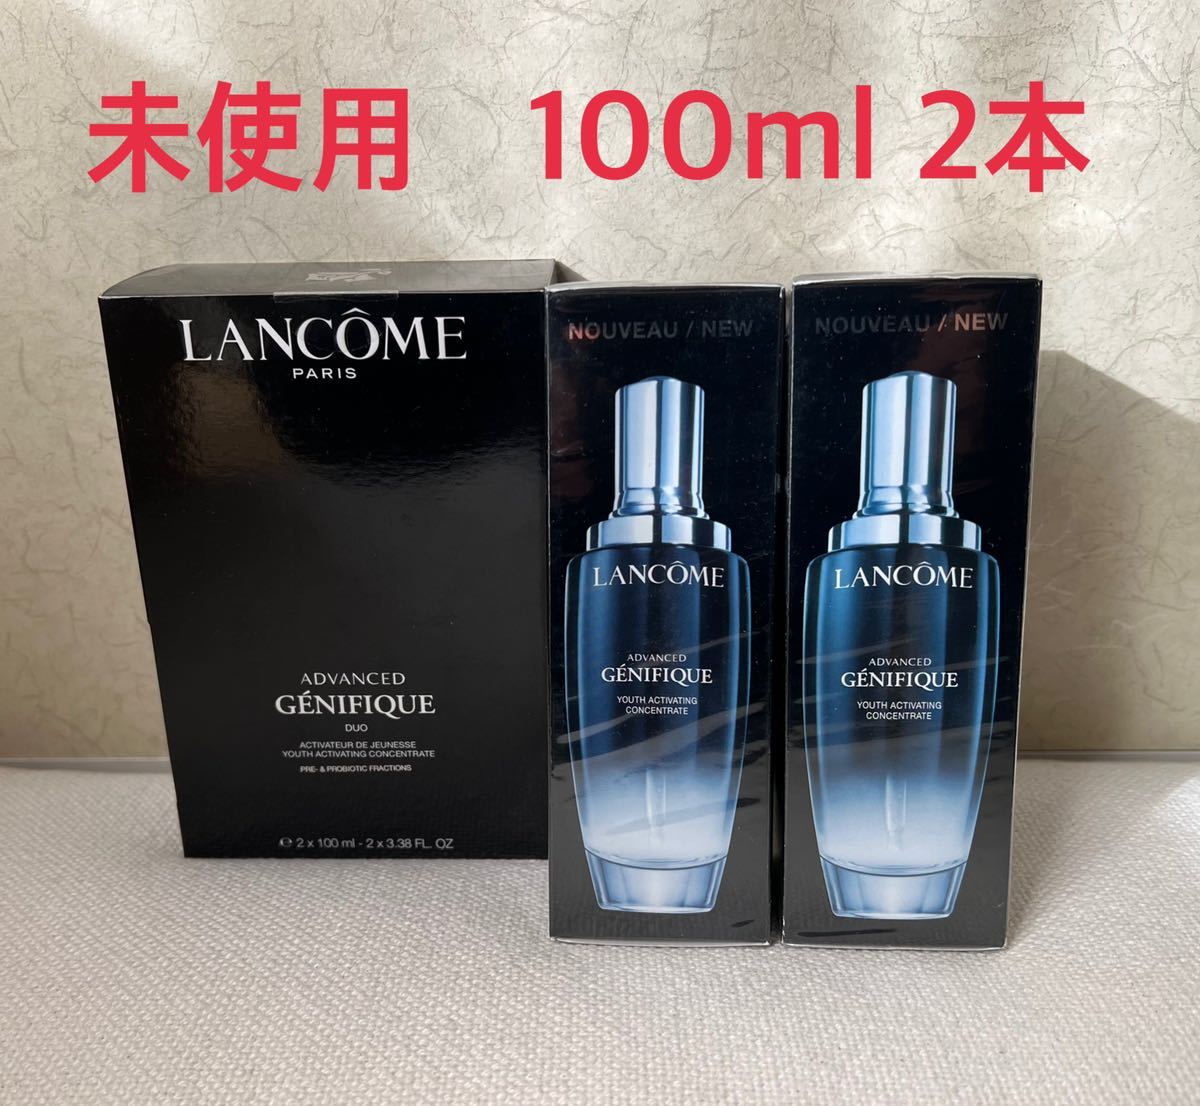  unused new goods LANCOME Lancome jenifik advanced N 100ml 2 pcs set France beauty care liquid liquidation price great special price 